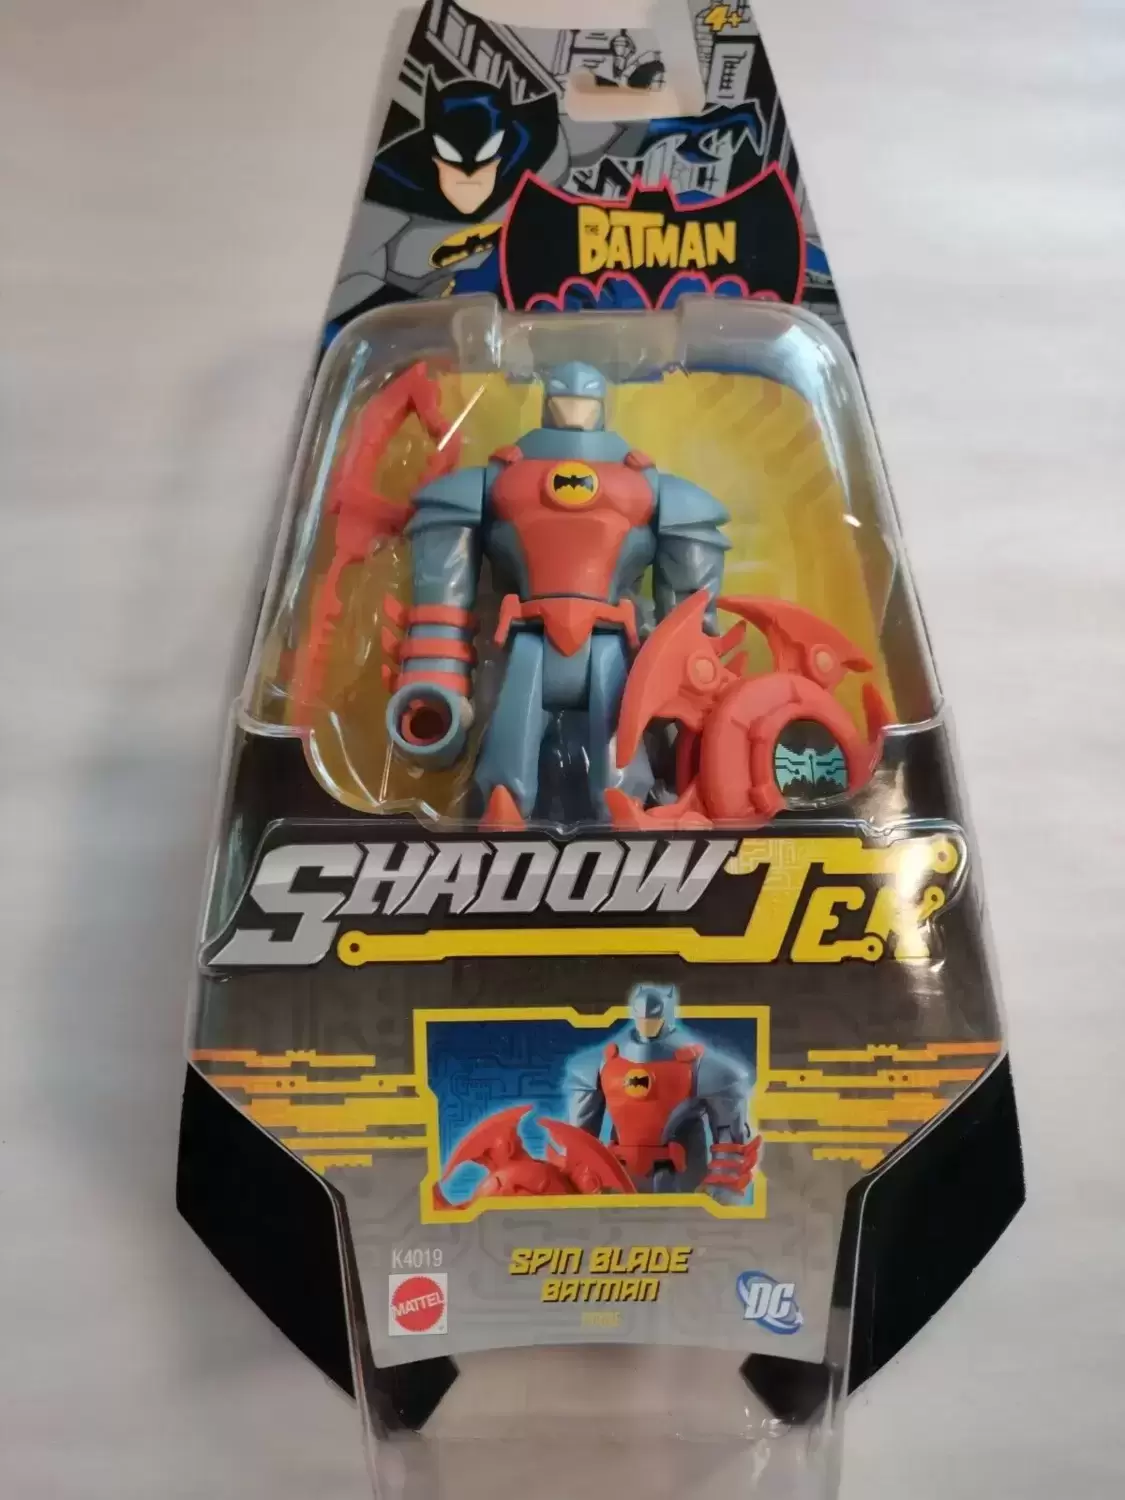 The Batman - Shadow Tek - Spin Blade Batman